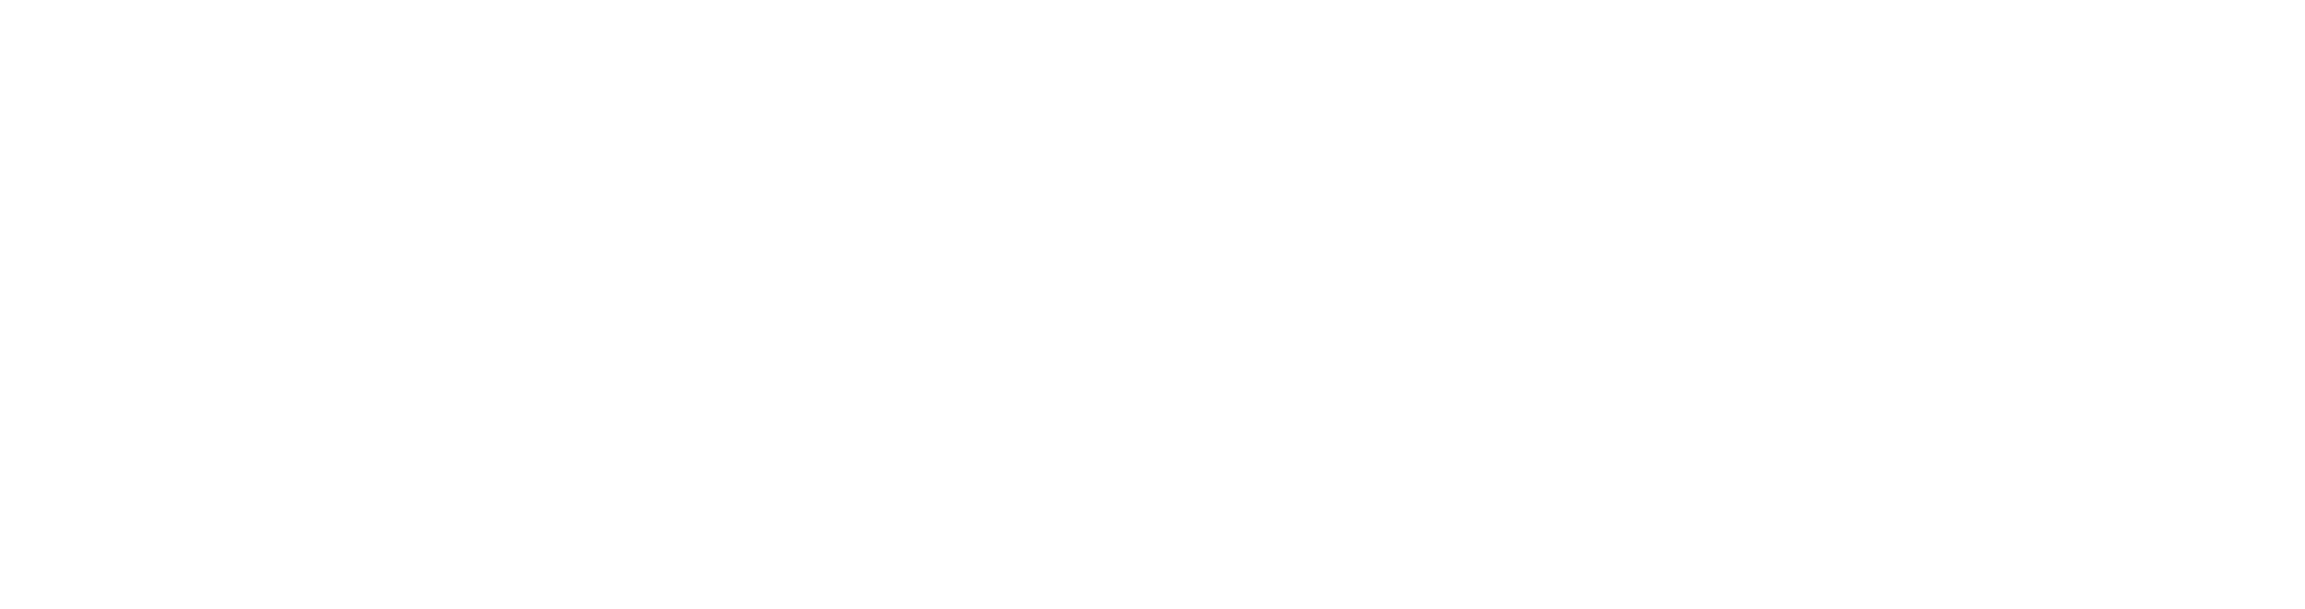 Neurology, Neurosurgery, Spine Care | UTHealth Neurosciences logo in white